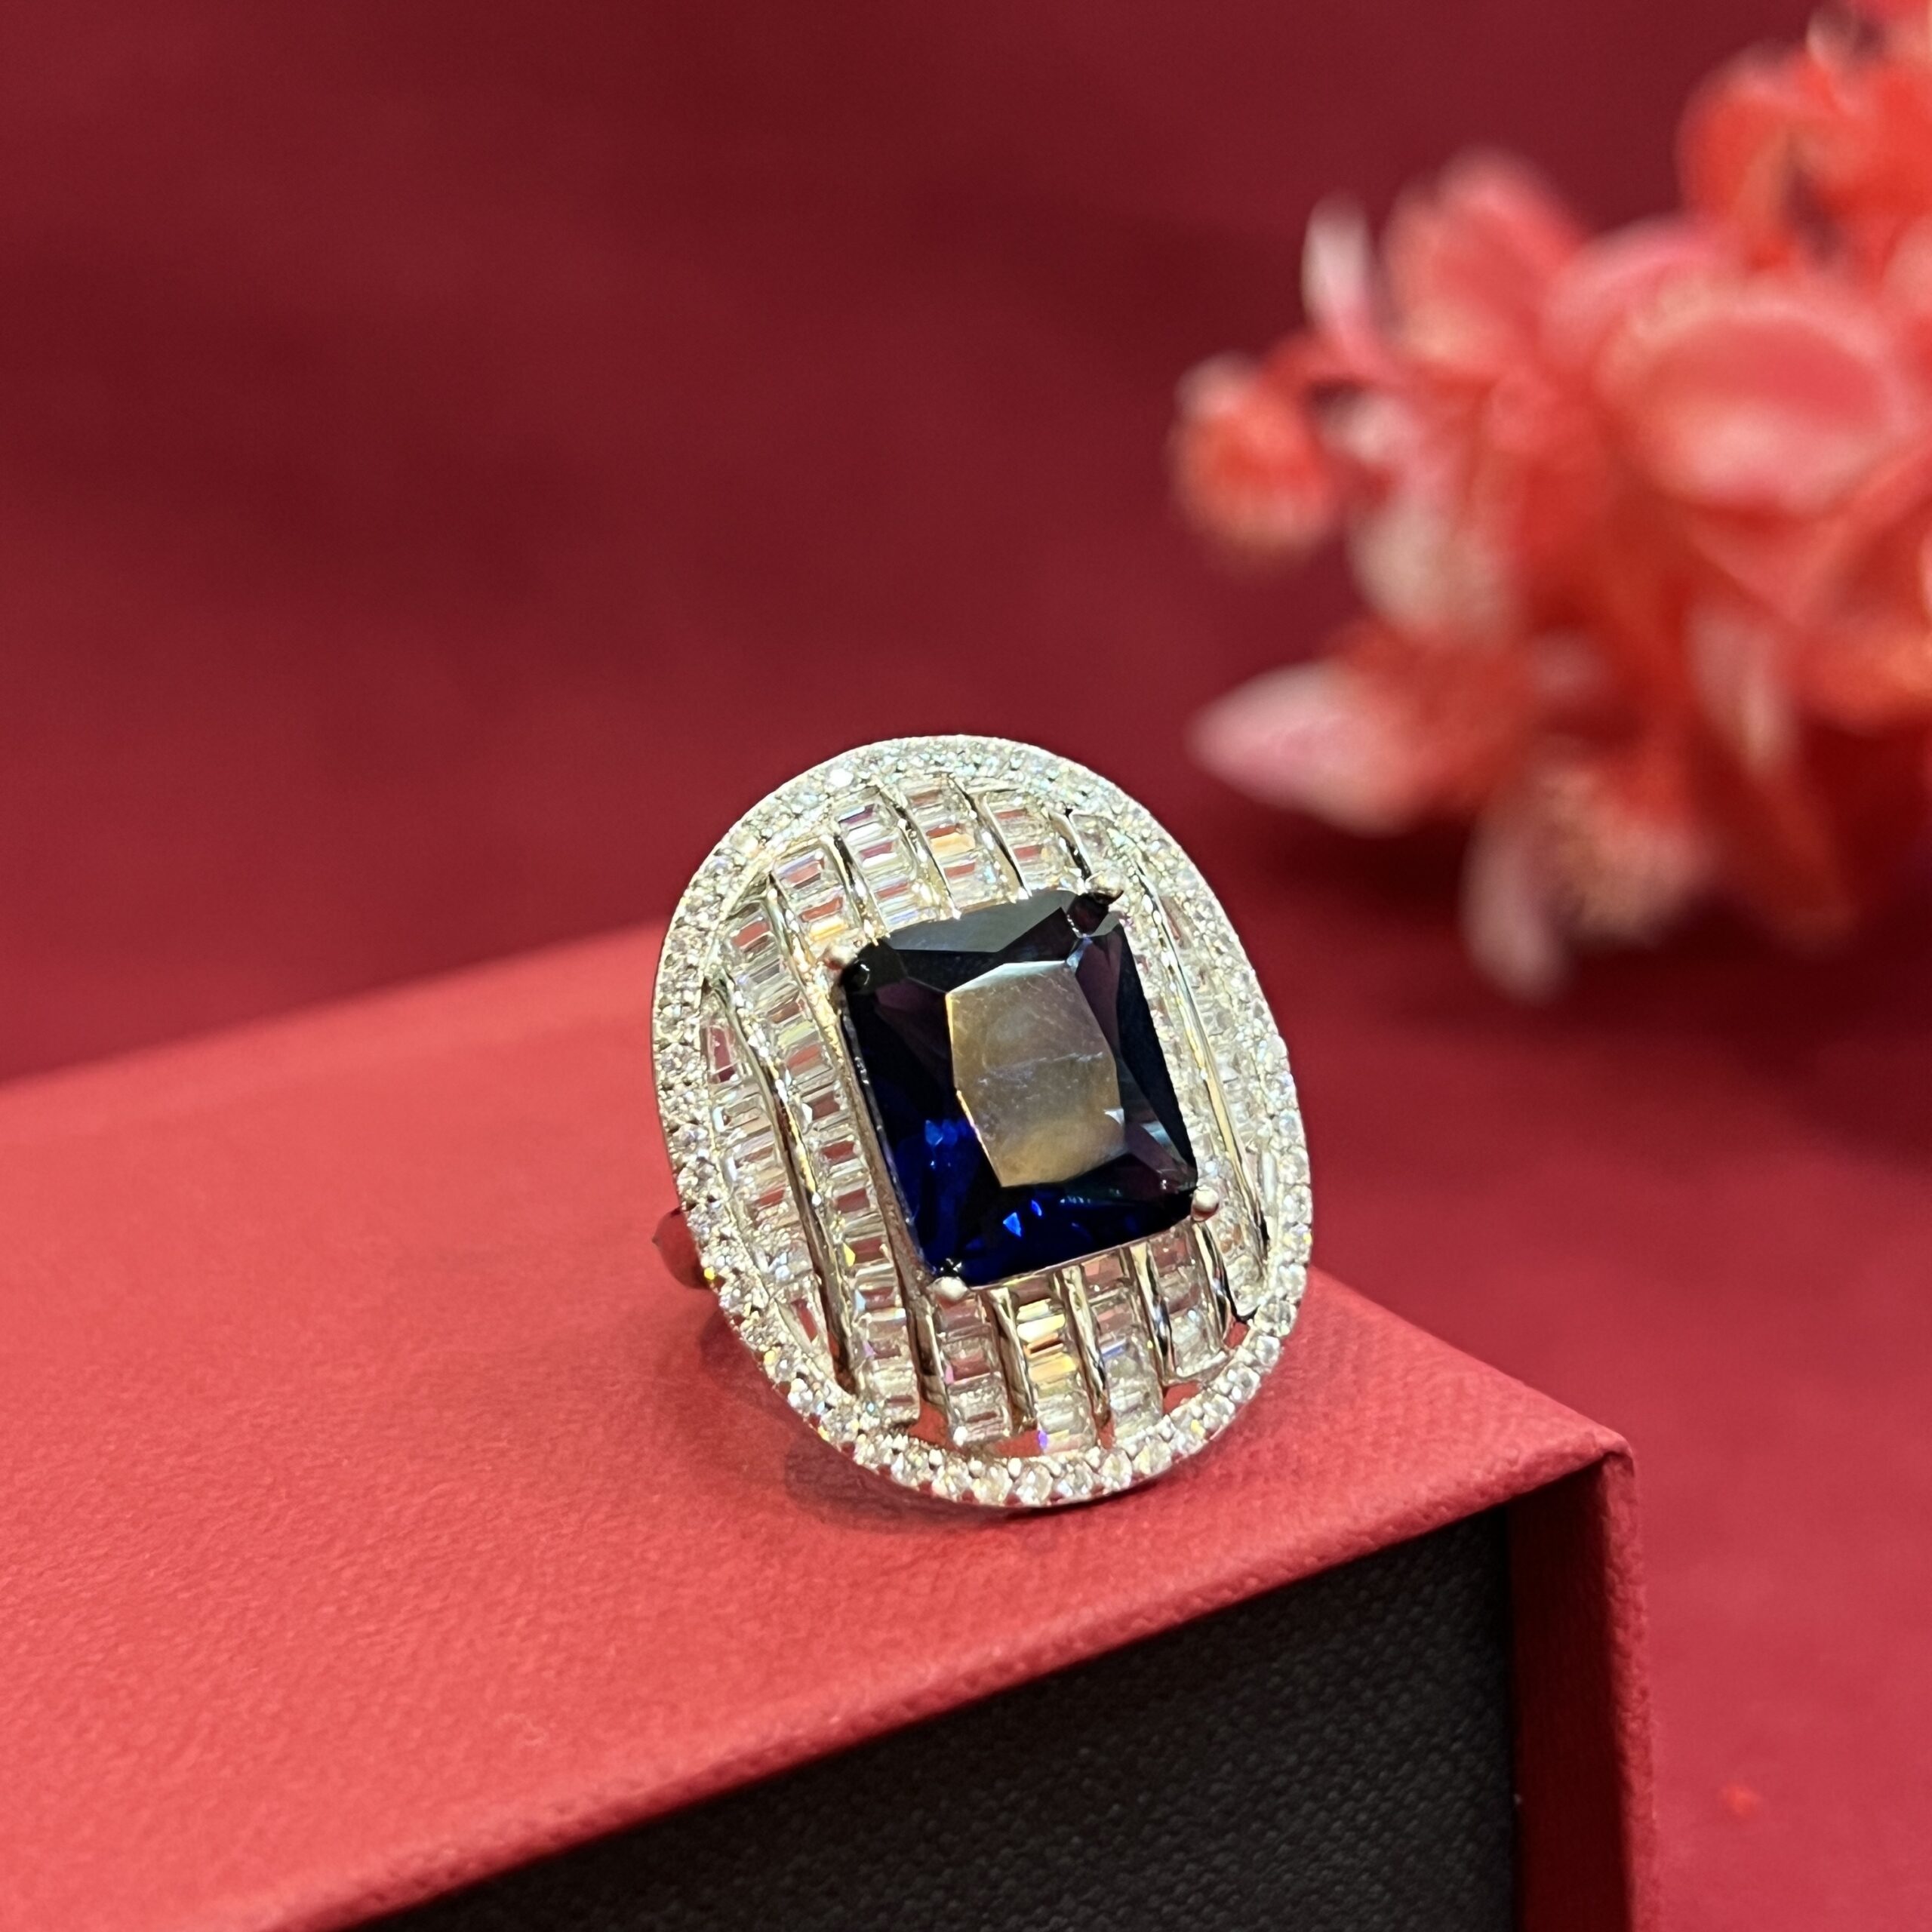 Three Stone Designer Engagement Ring - PureGemsJewels